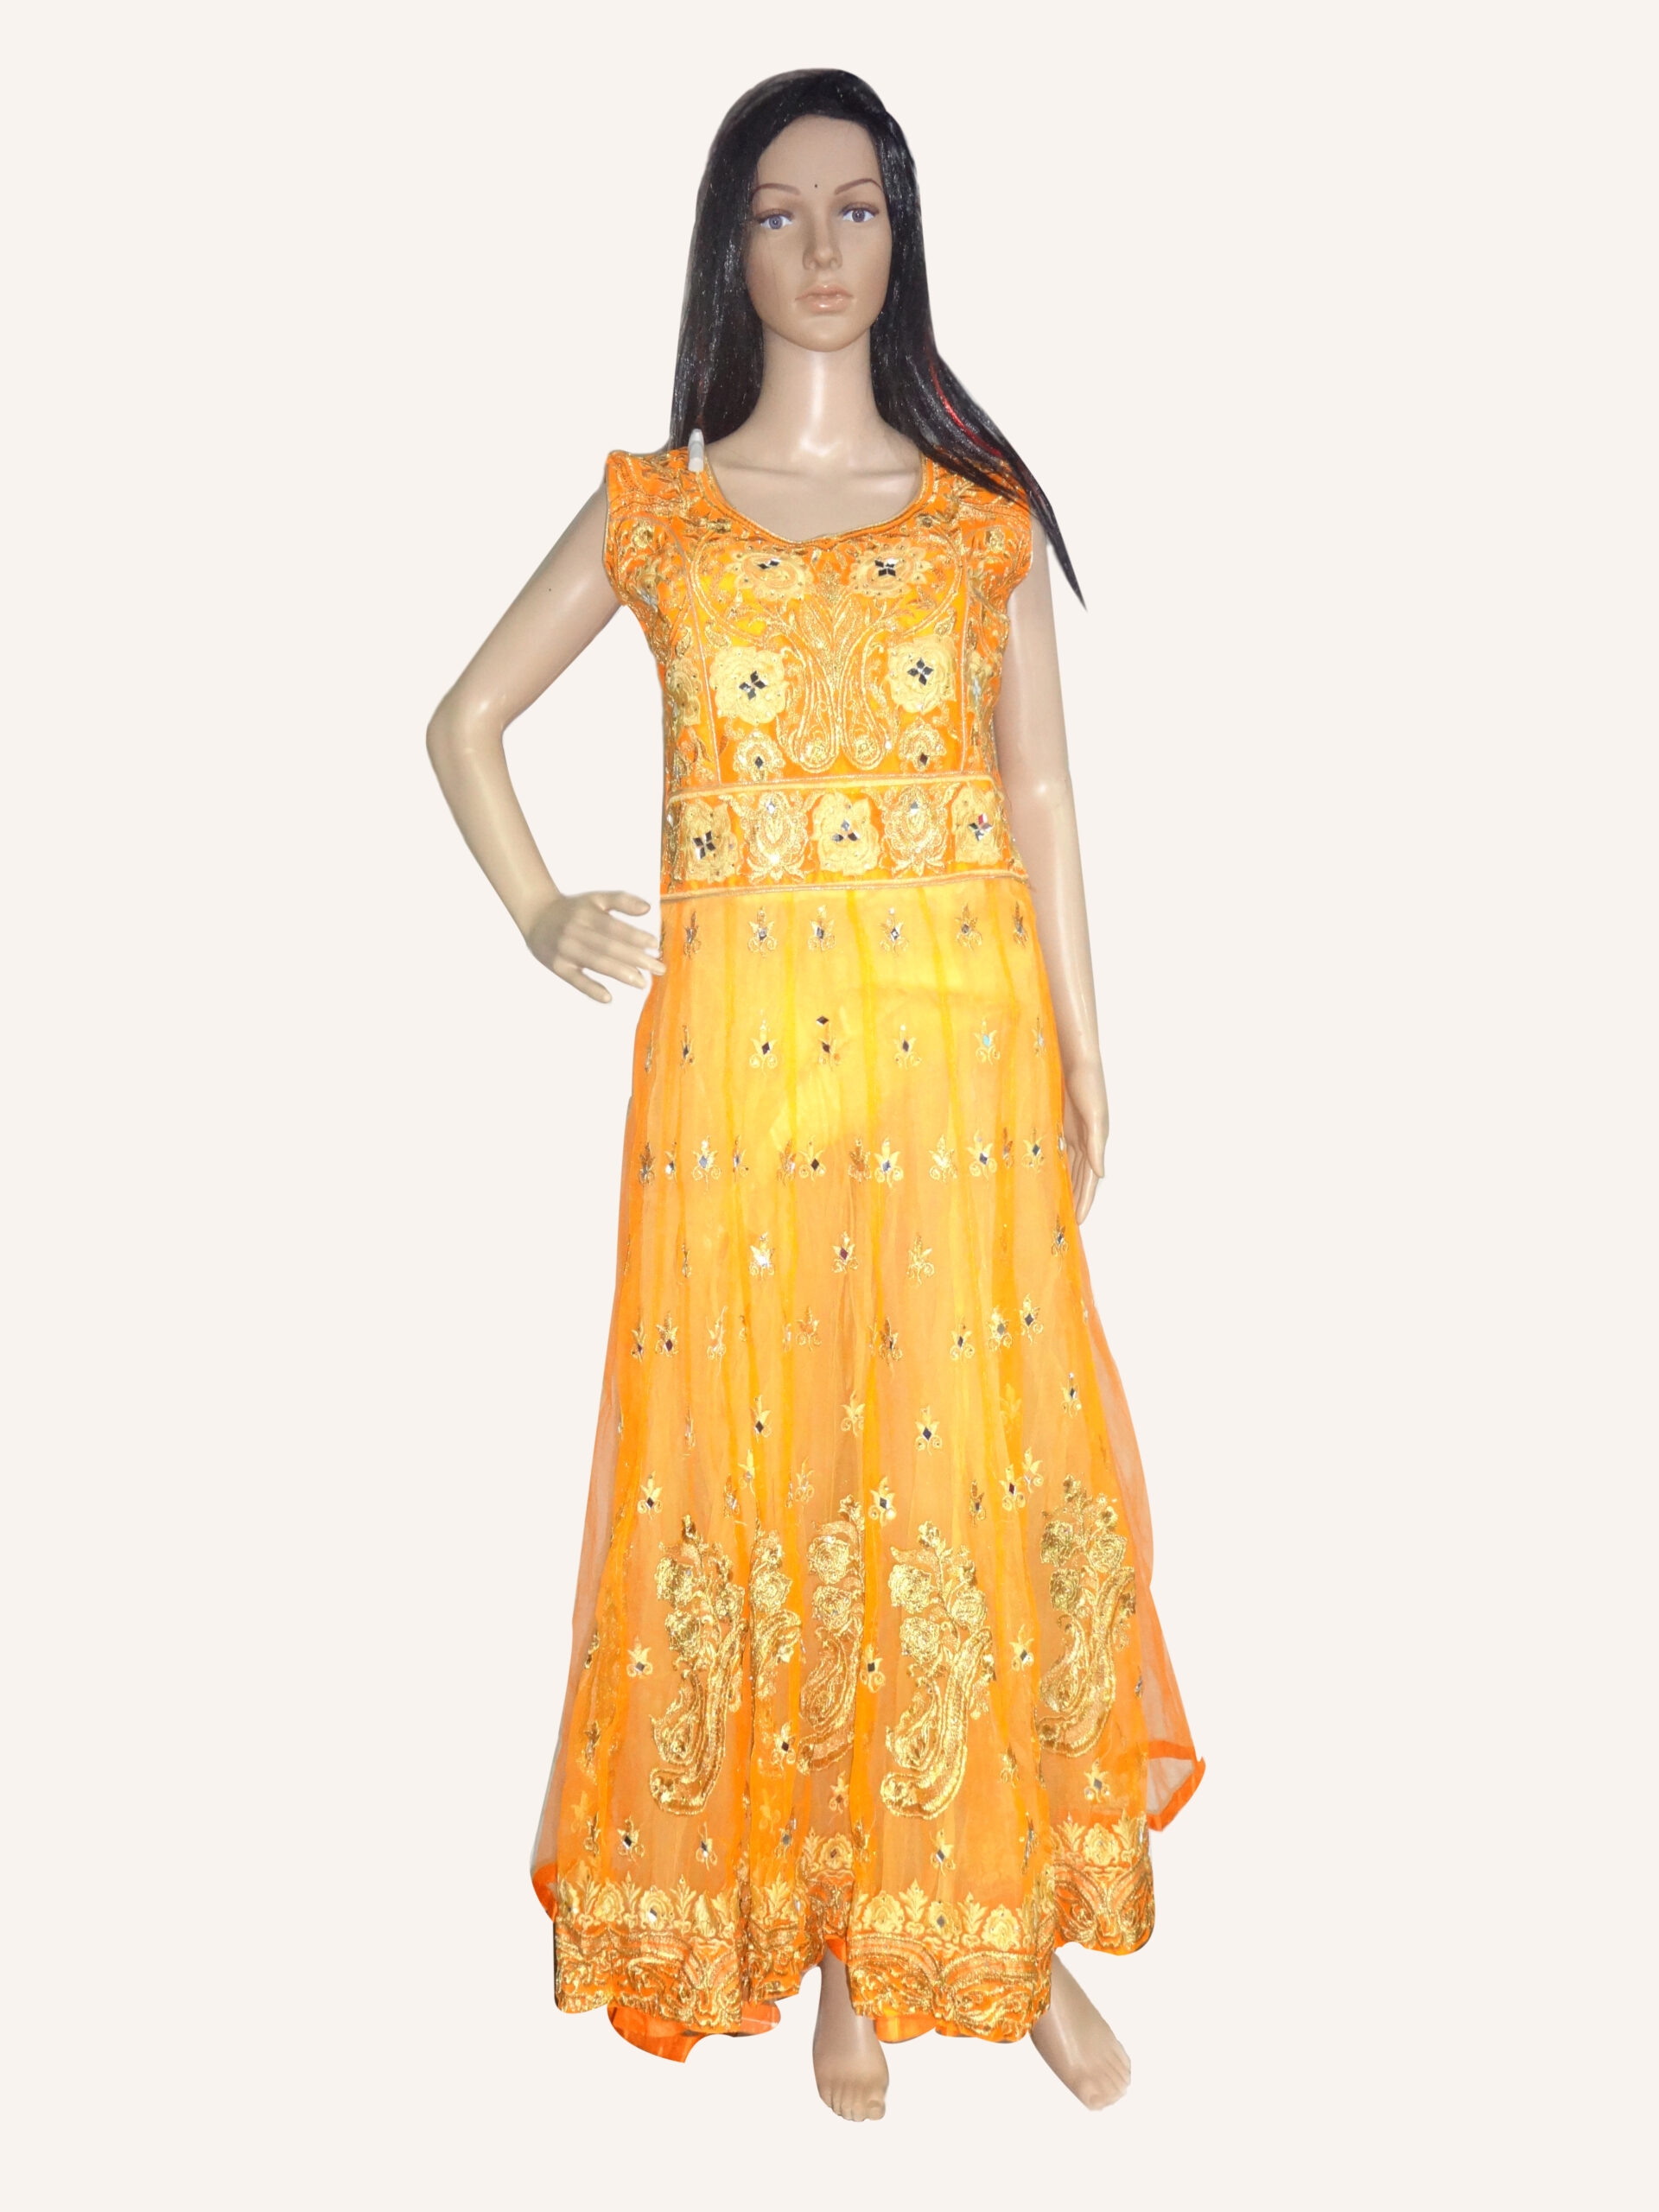 Empire Dresses for sale in Bangalore, India | Facebook Marketplace |  Facebook